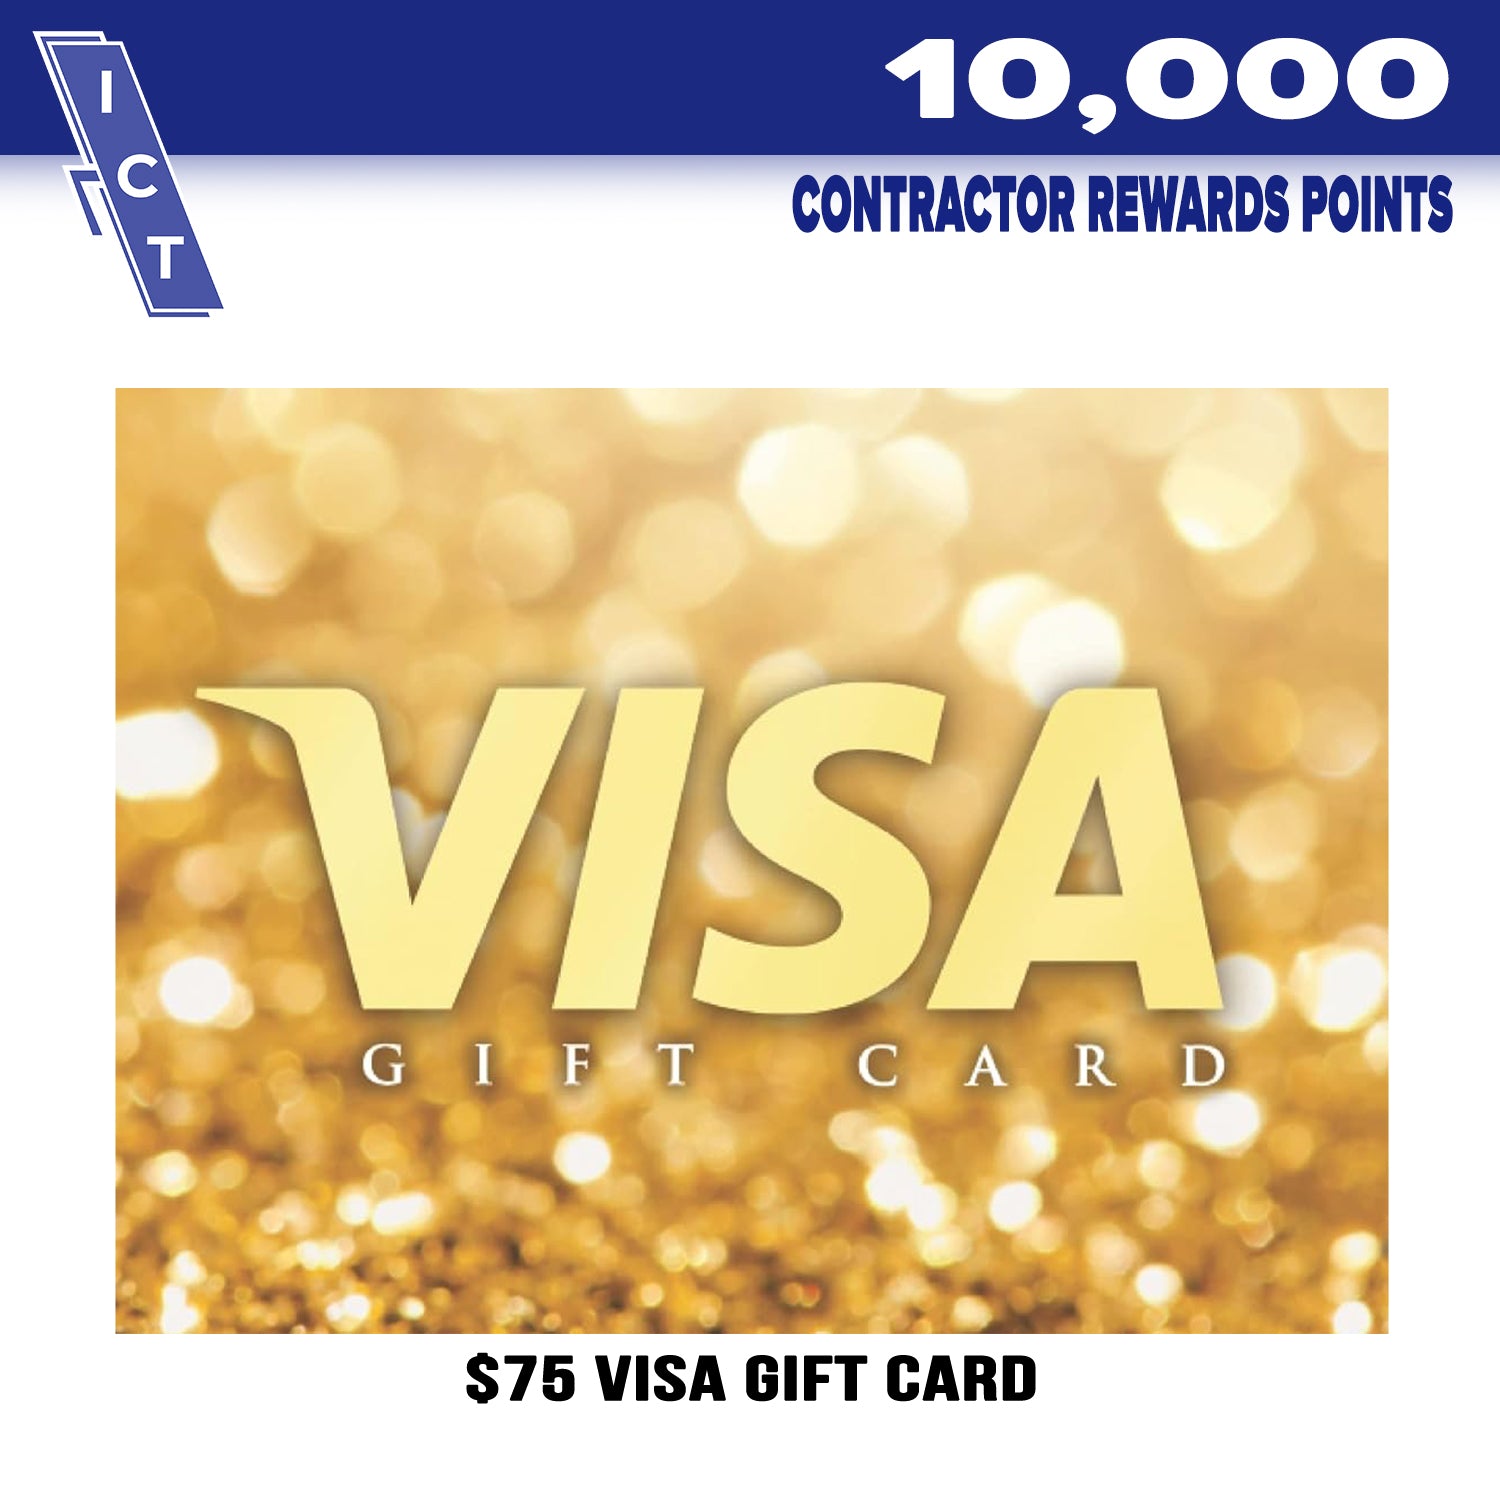 $75 Visa gift card for 10,000 points